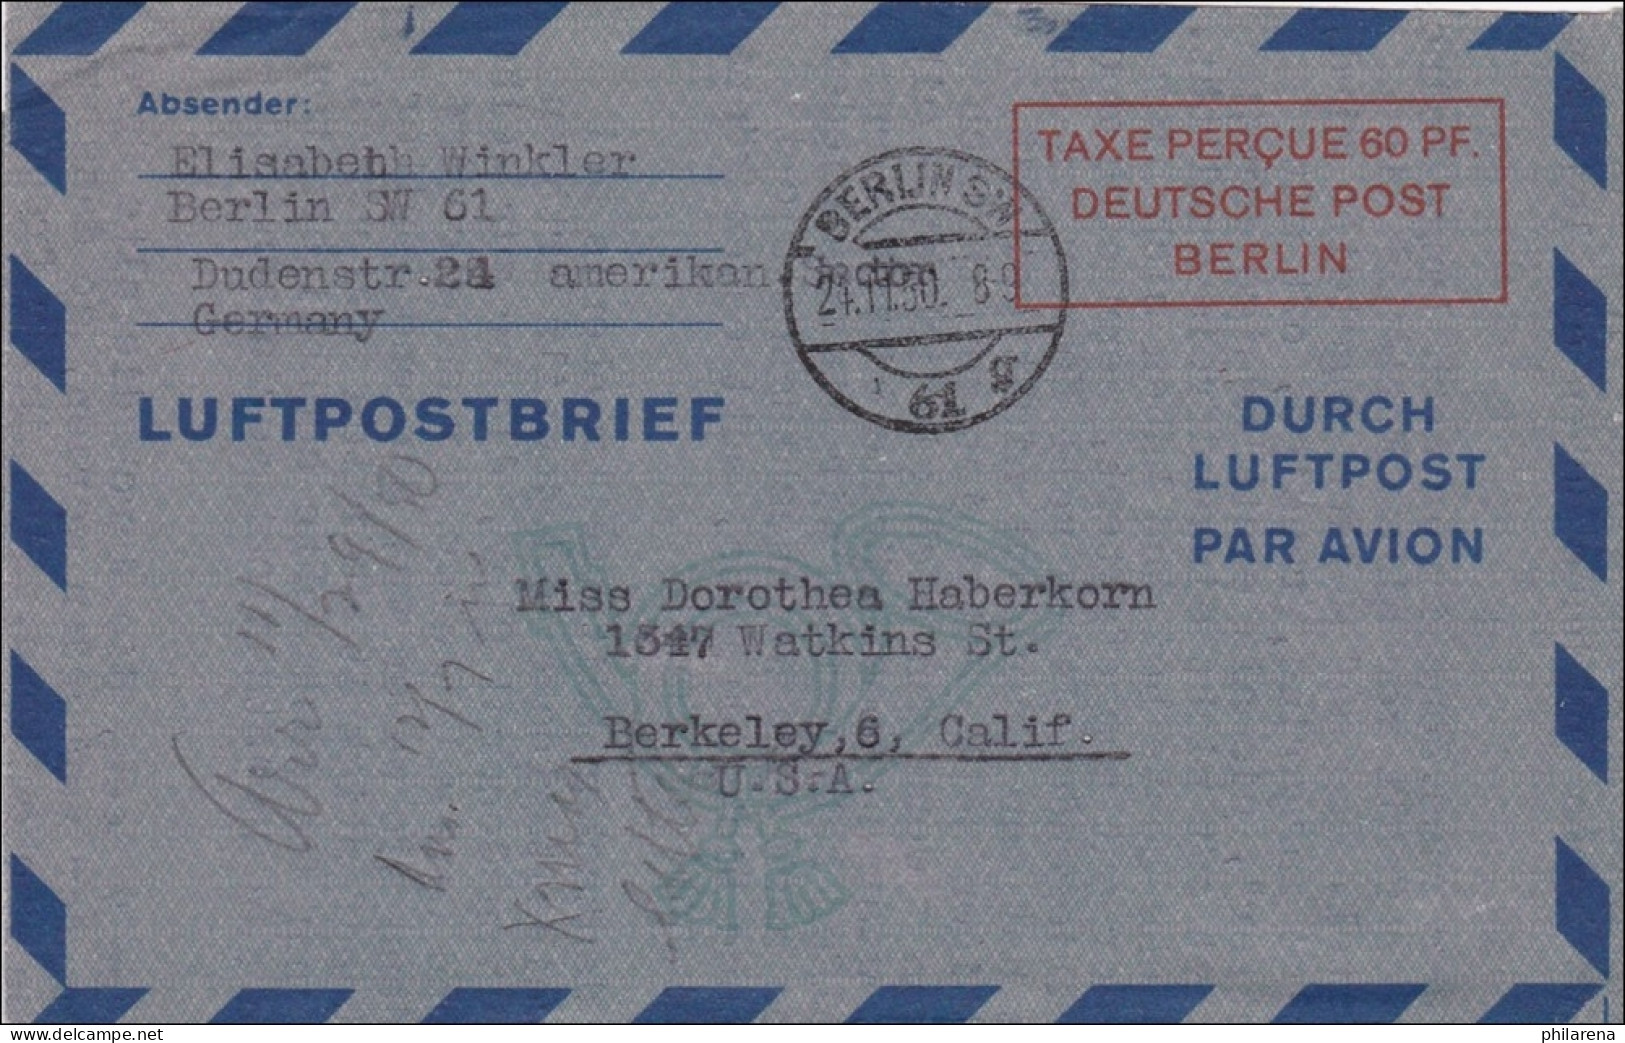 Luftpostbrief - Taxe Percue Deutsche Post Berlin 1950 Nach USA - Covers & Documents